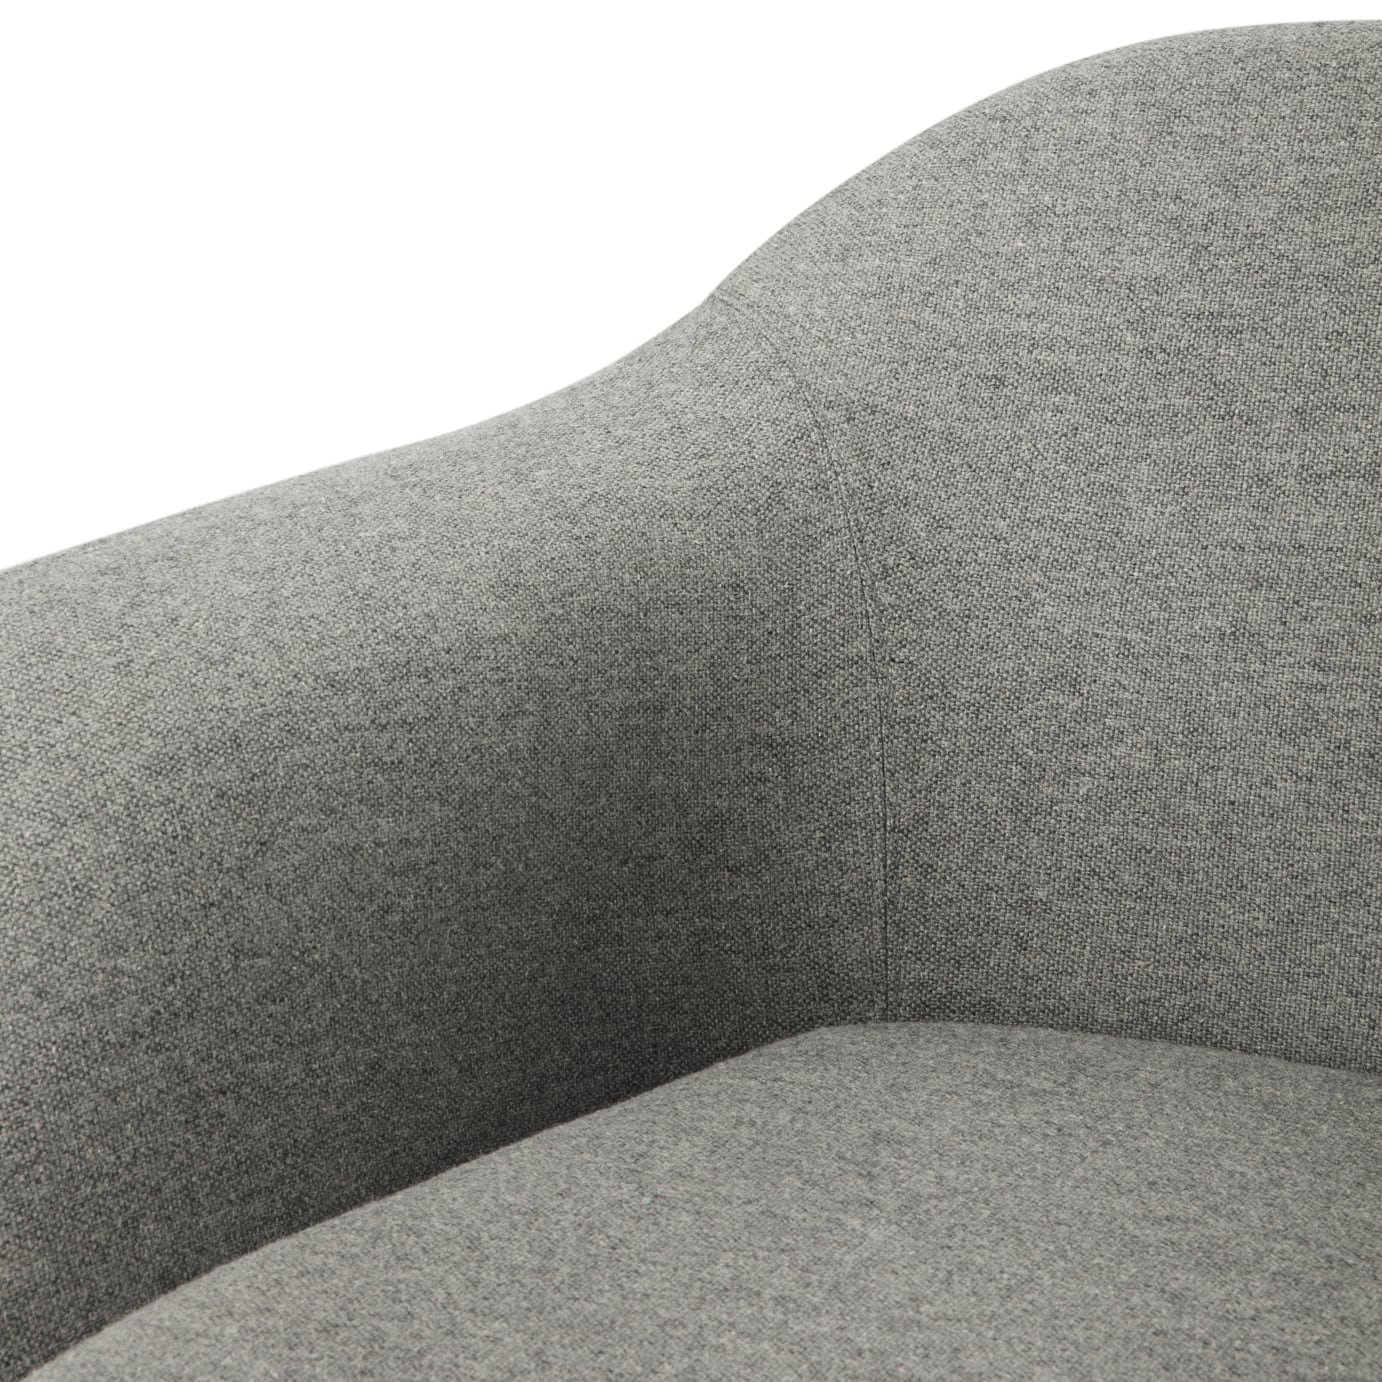 Normann Copenhagen Sum Modular 2 Seater Sofa. Made to order from someday designs. #colour_main-line-flax-camden